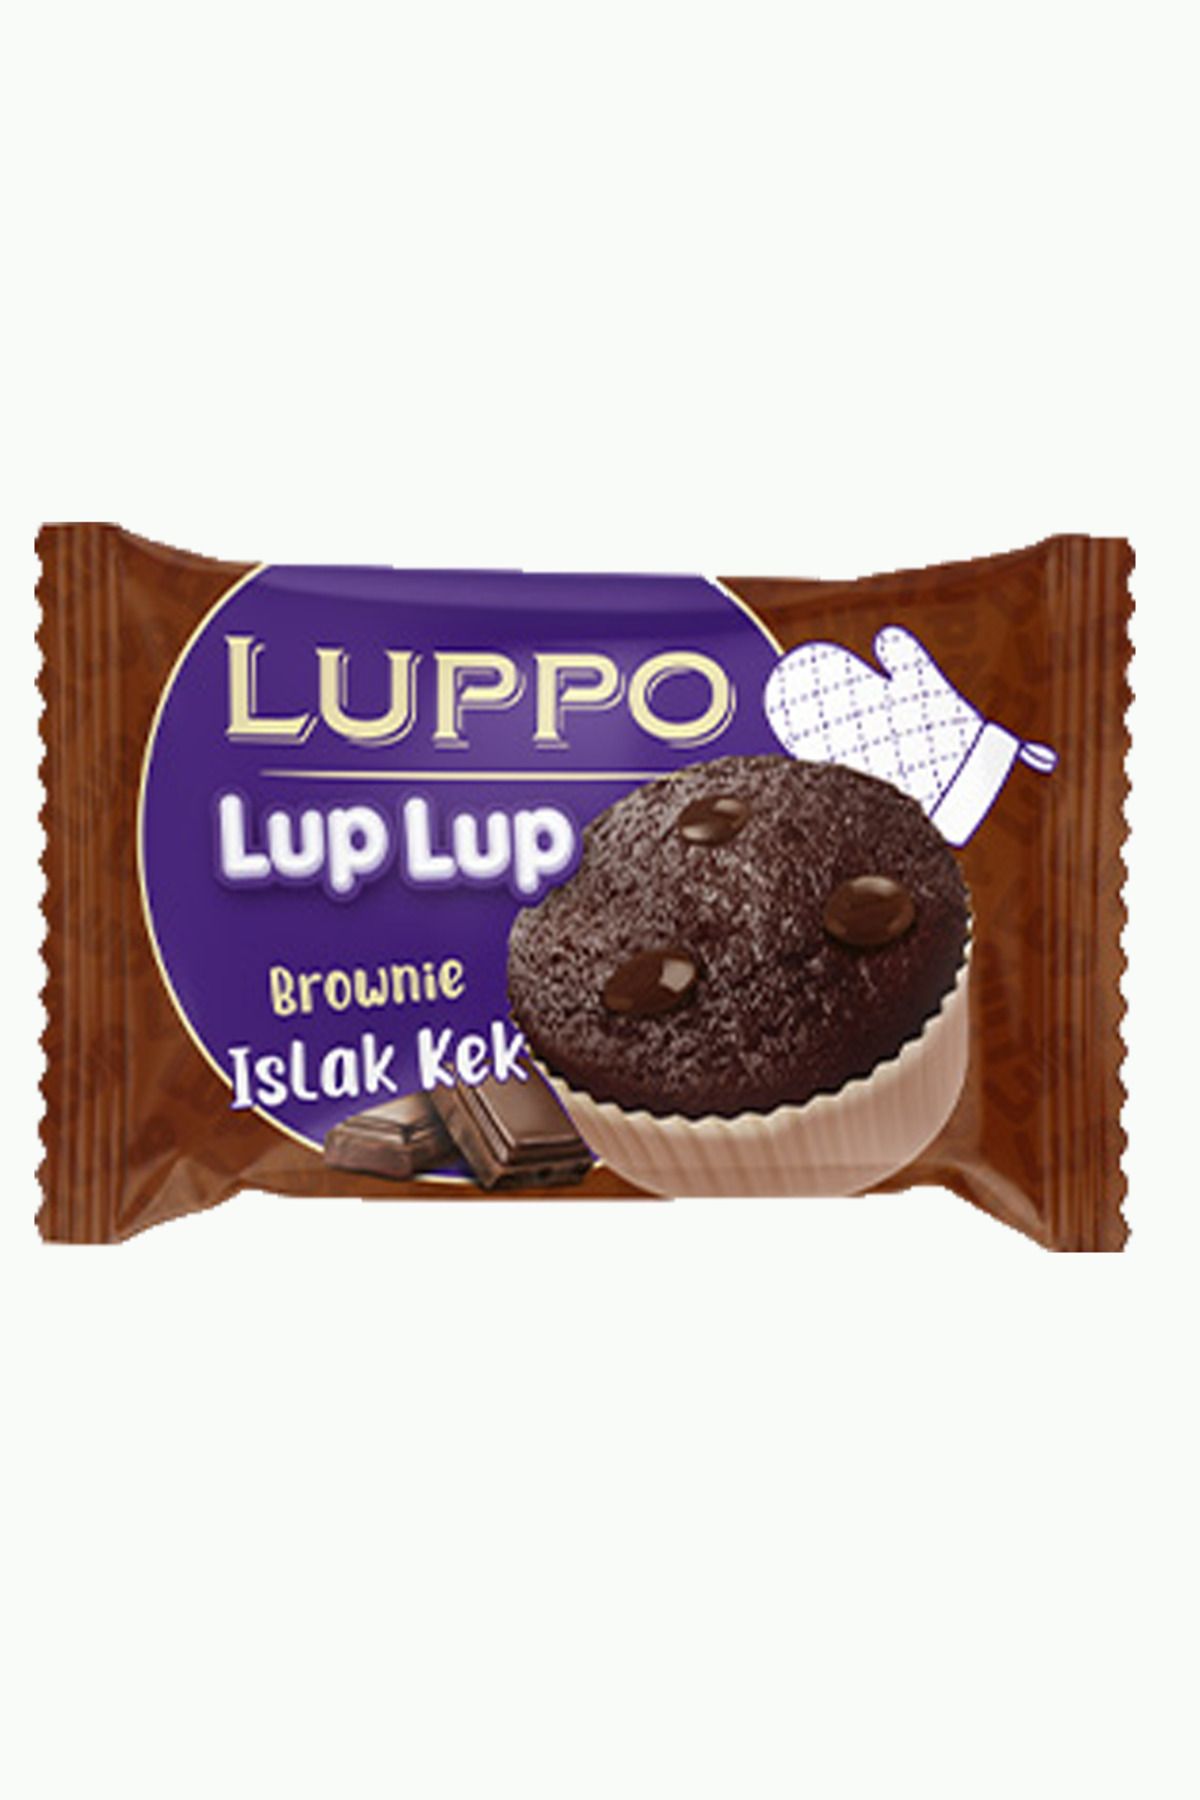 Luppo Lup Lup Brown Çikolatalı Islak Kek 40gr x 24 Adet